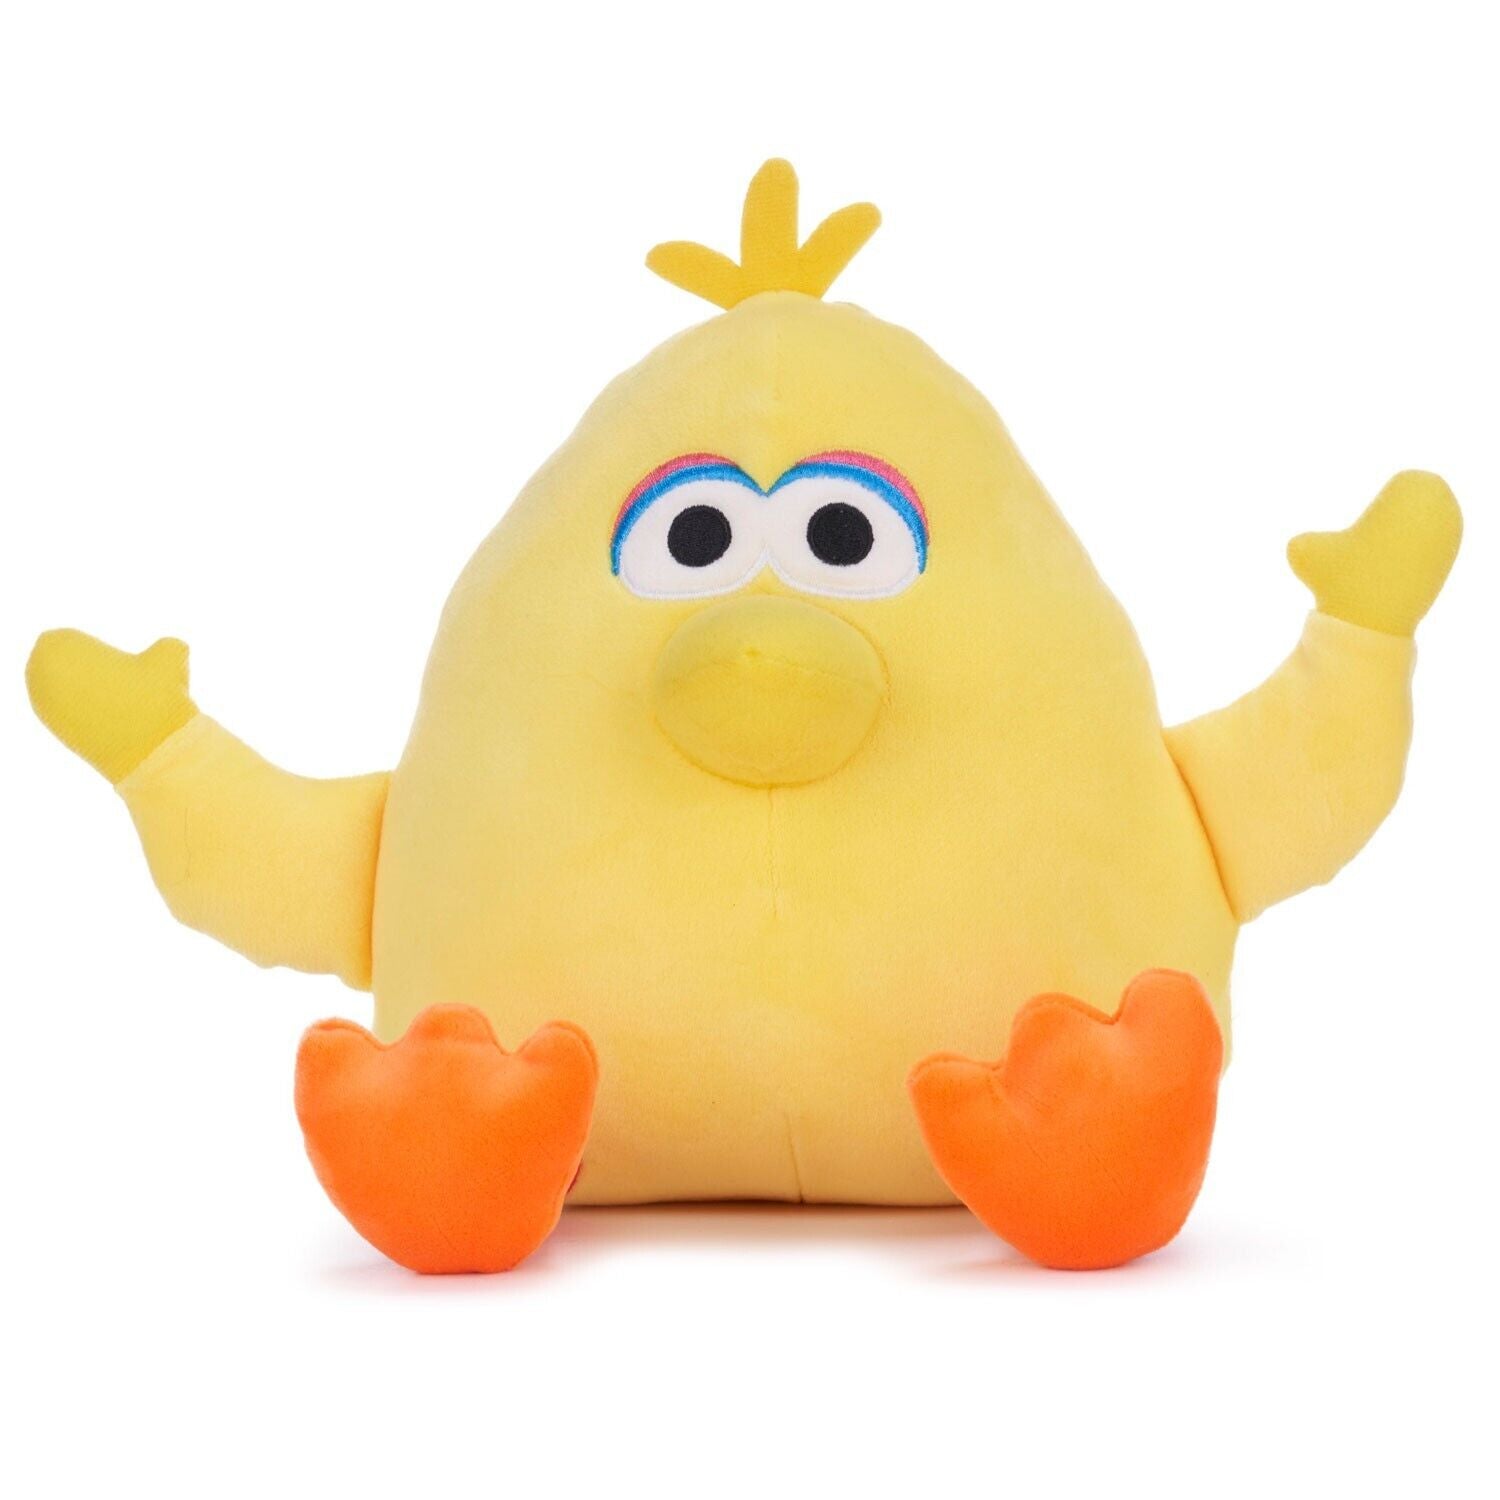 "New Sesame Street Squashy Podgies 8" Plush Big Bird Toy"